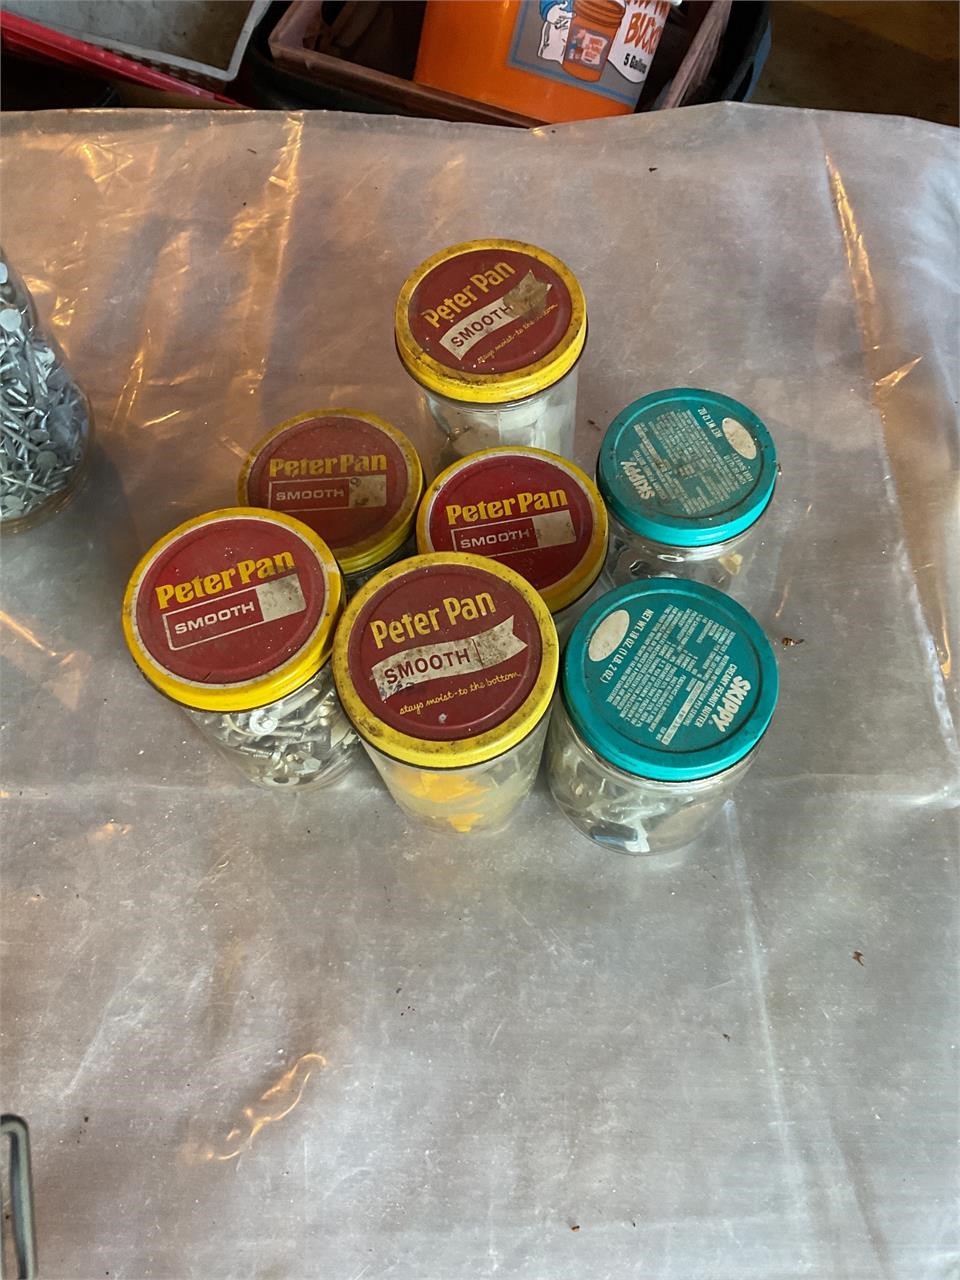 Vintage peanut butter jars full of screws etc